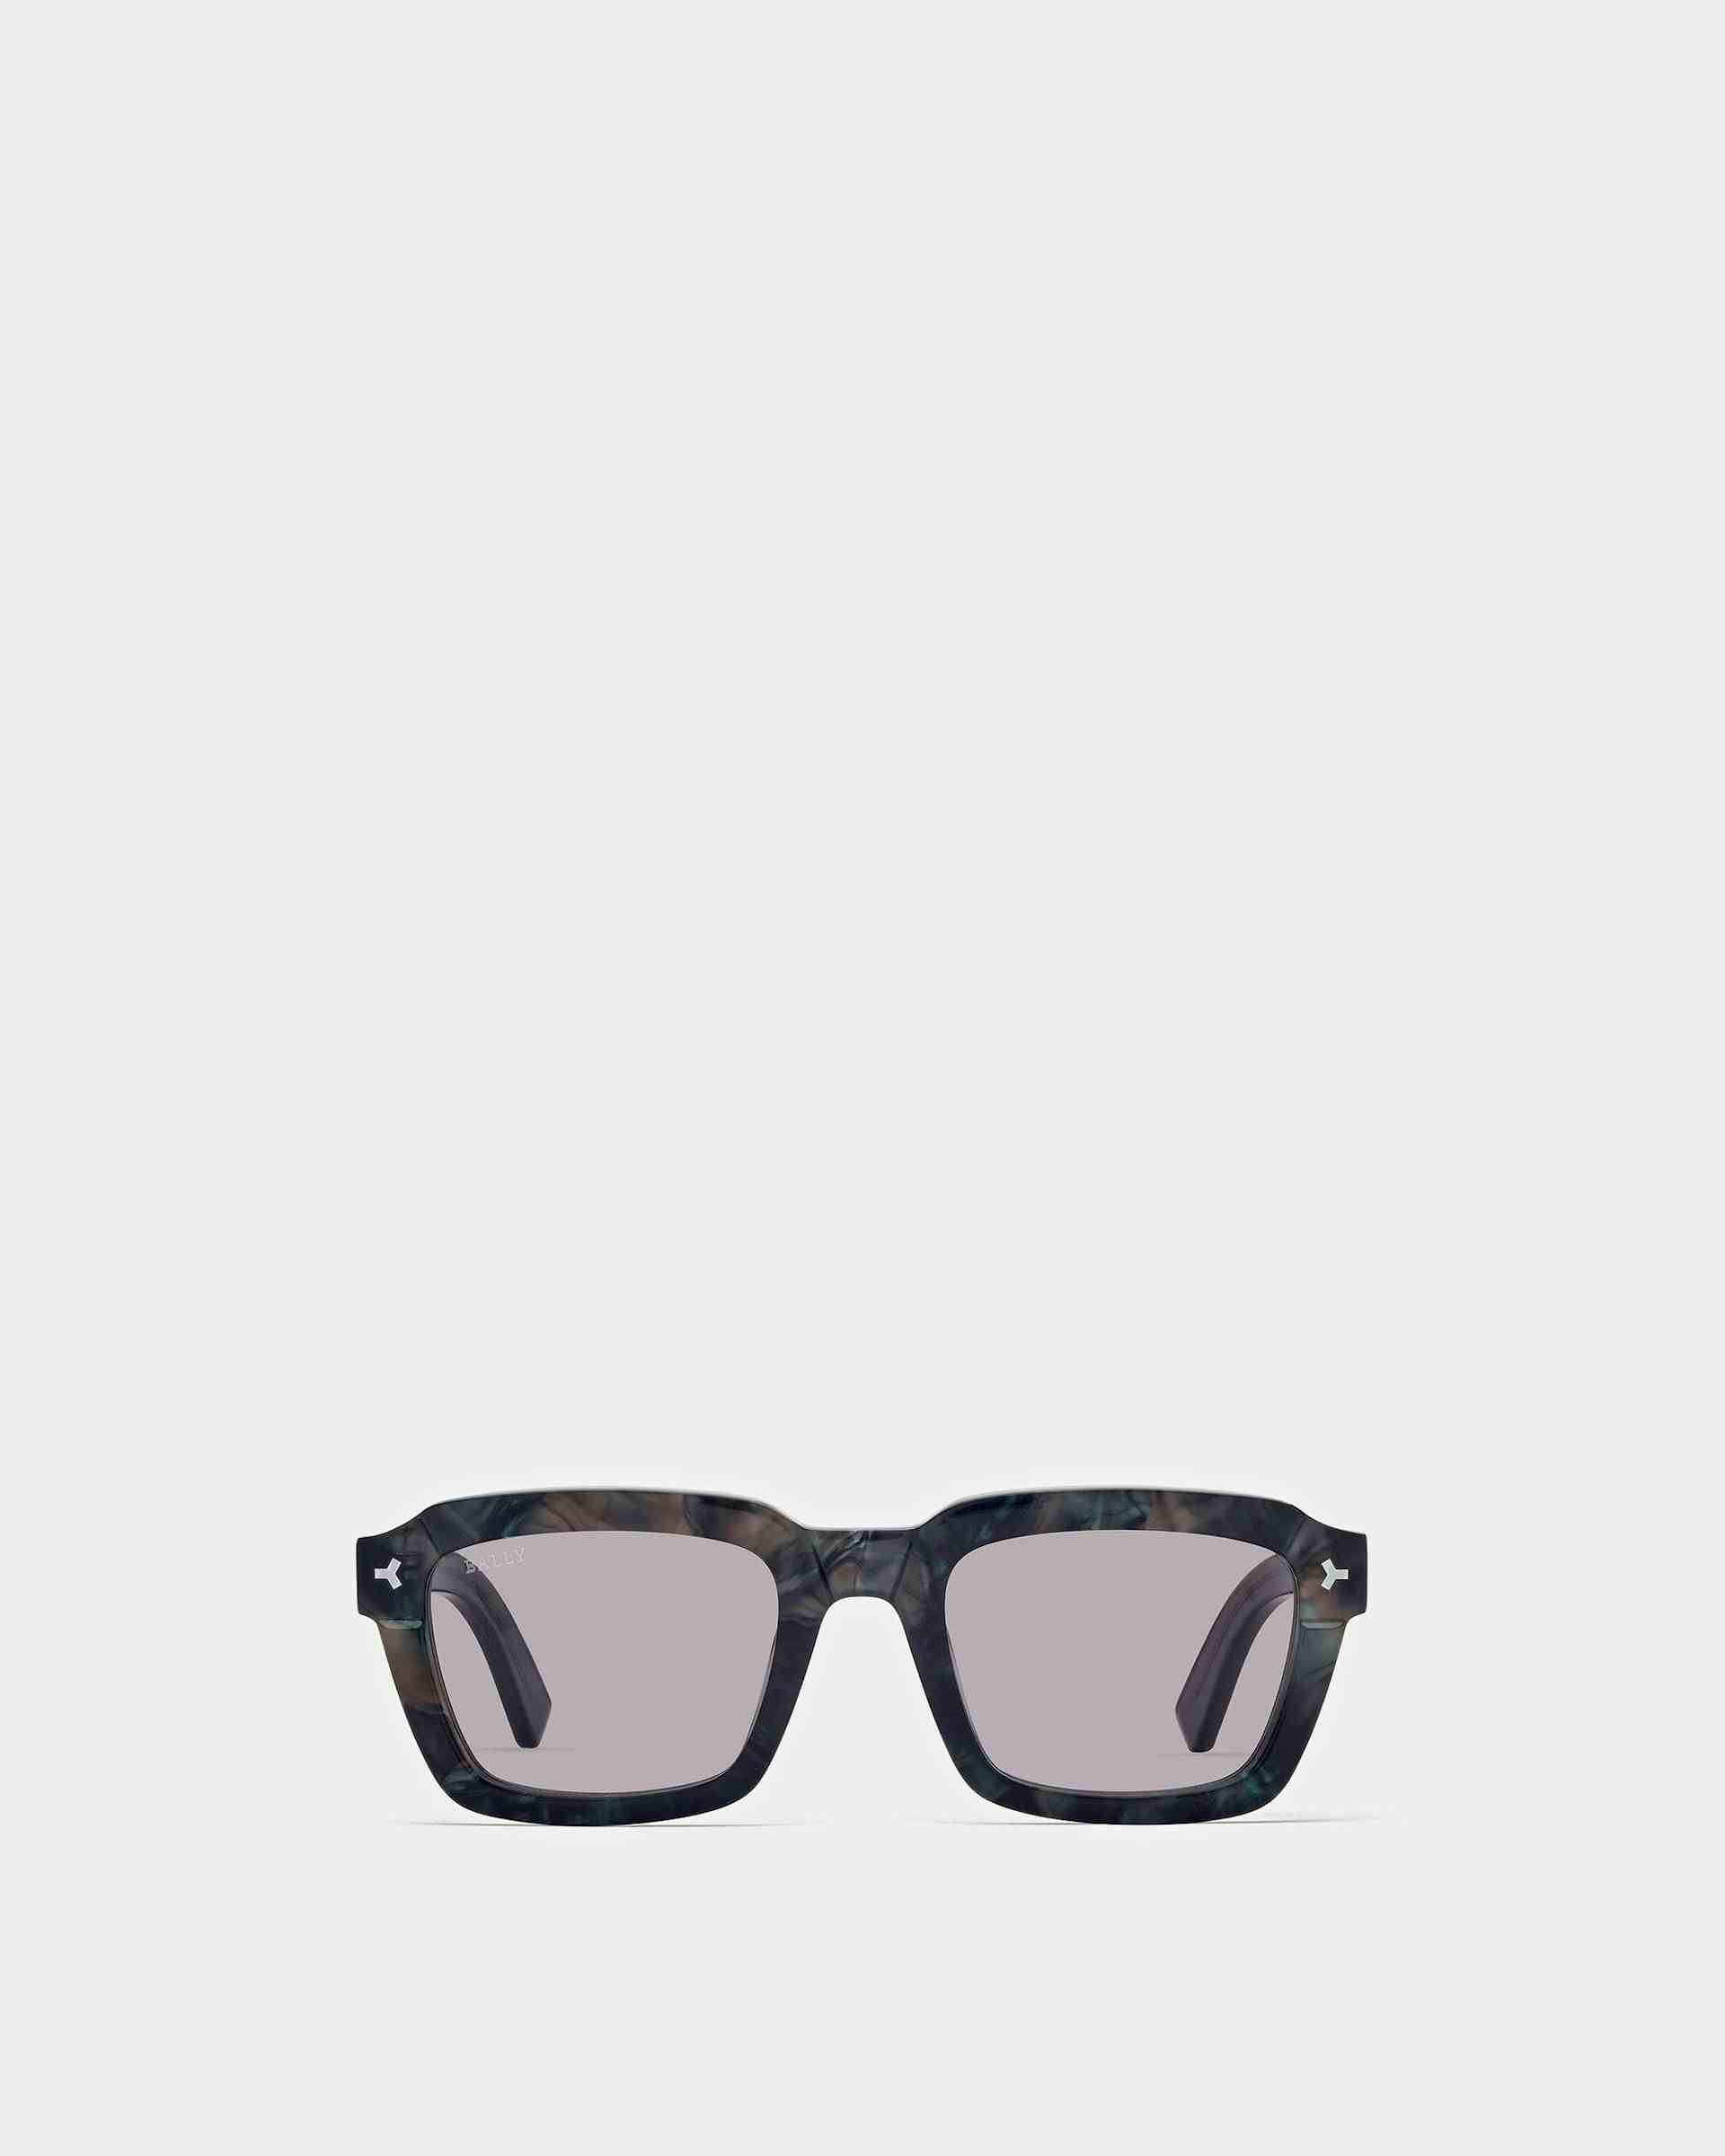 Nicholas Rectangular Full Rim Sunglasses In Black And Gray Plastic - Men's - Bally